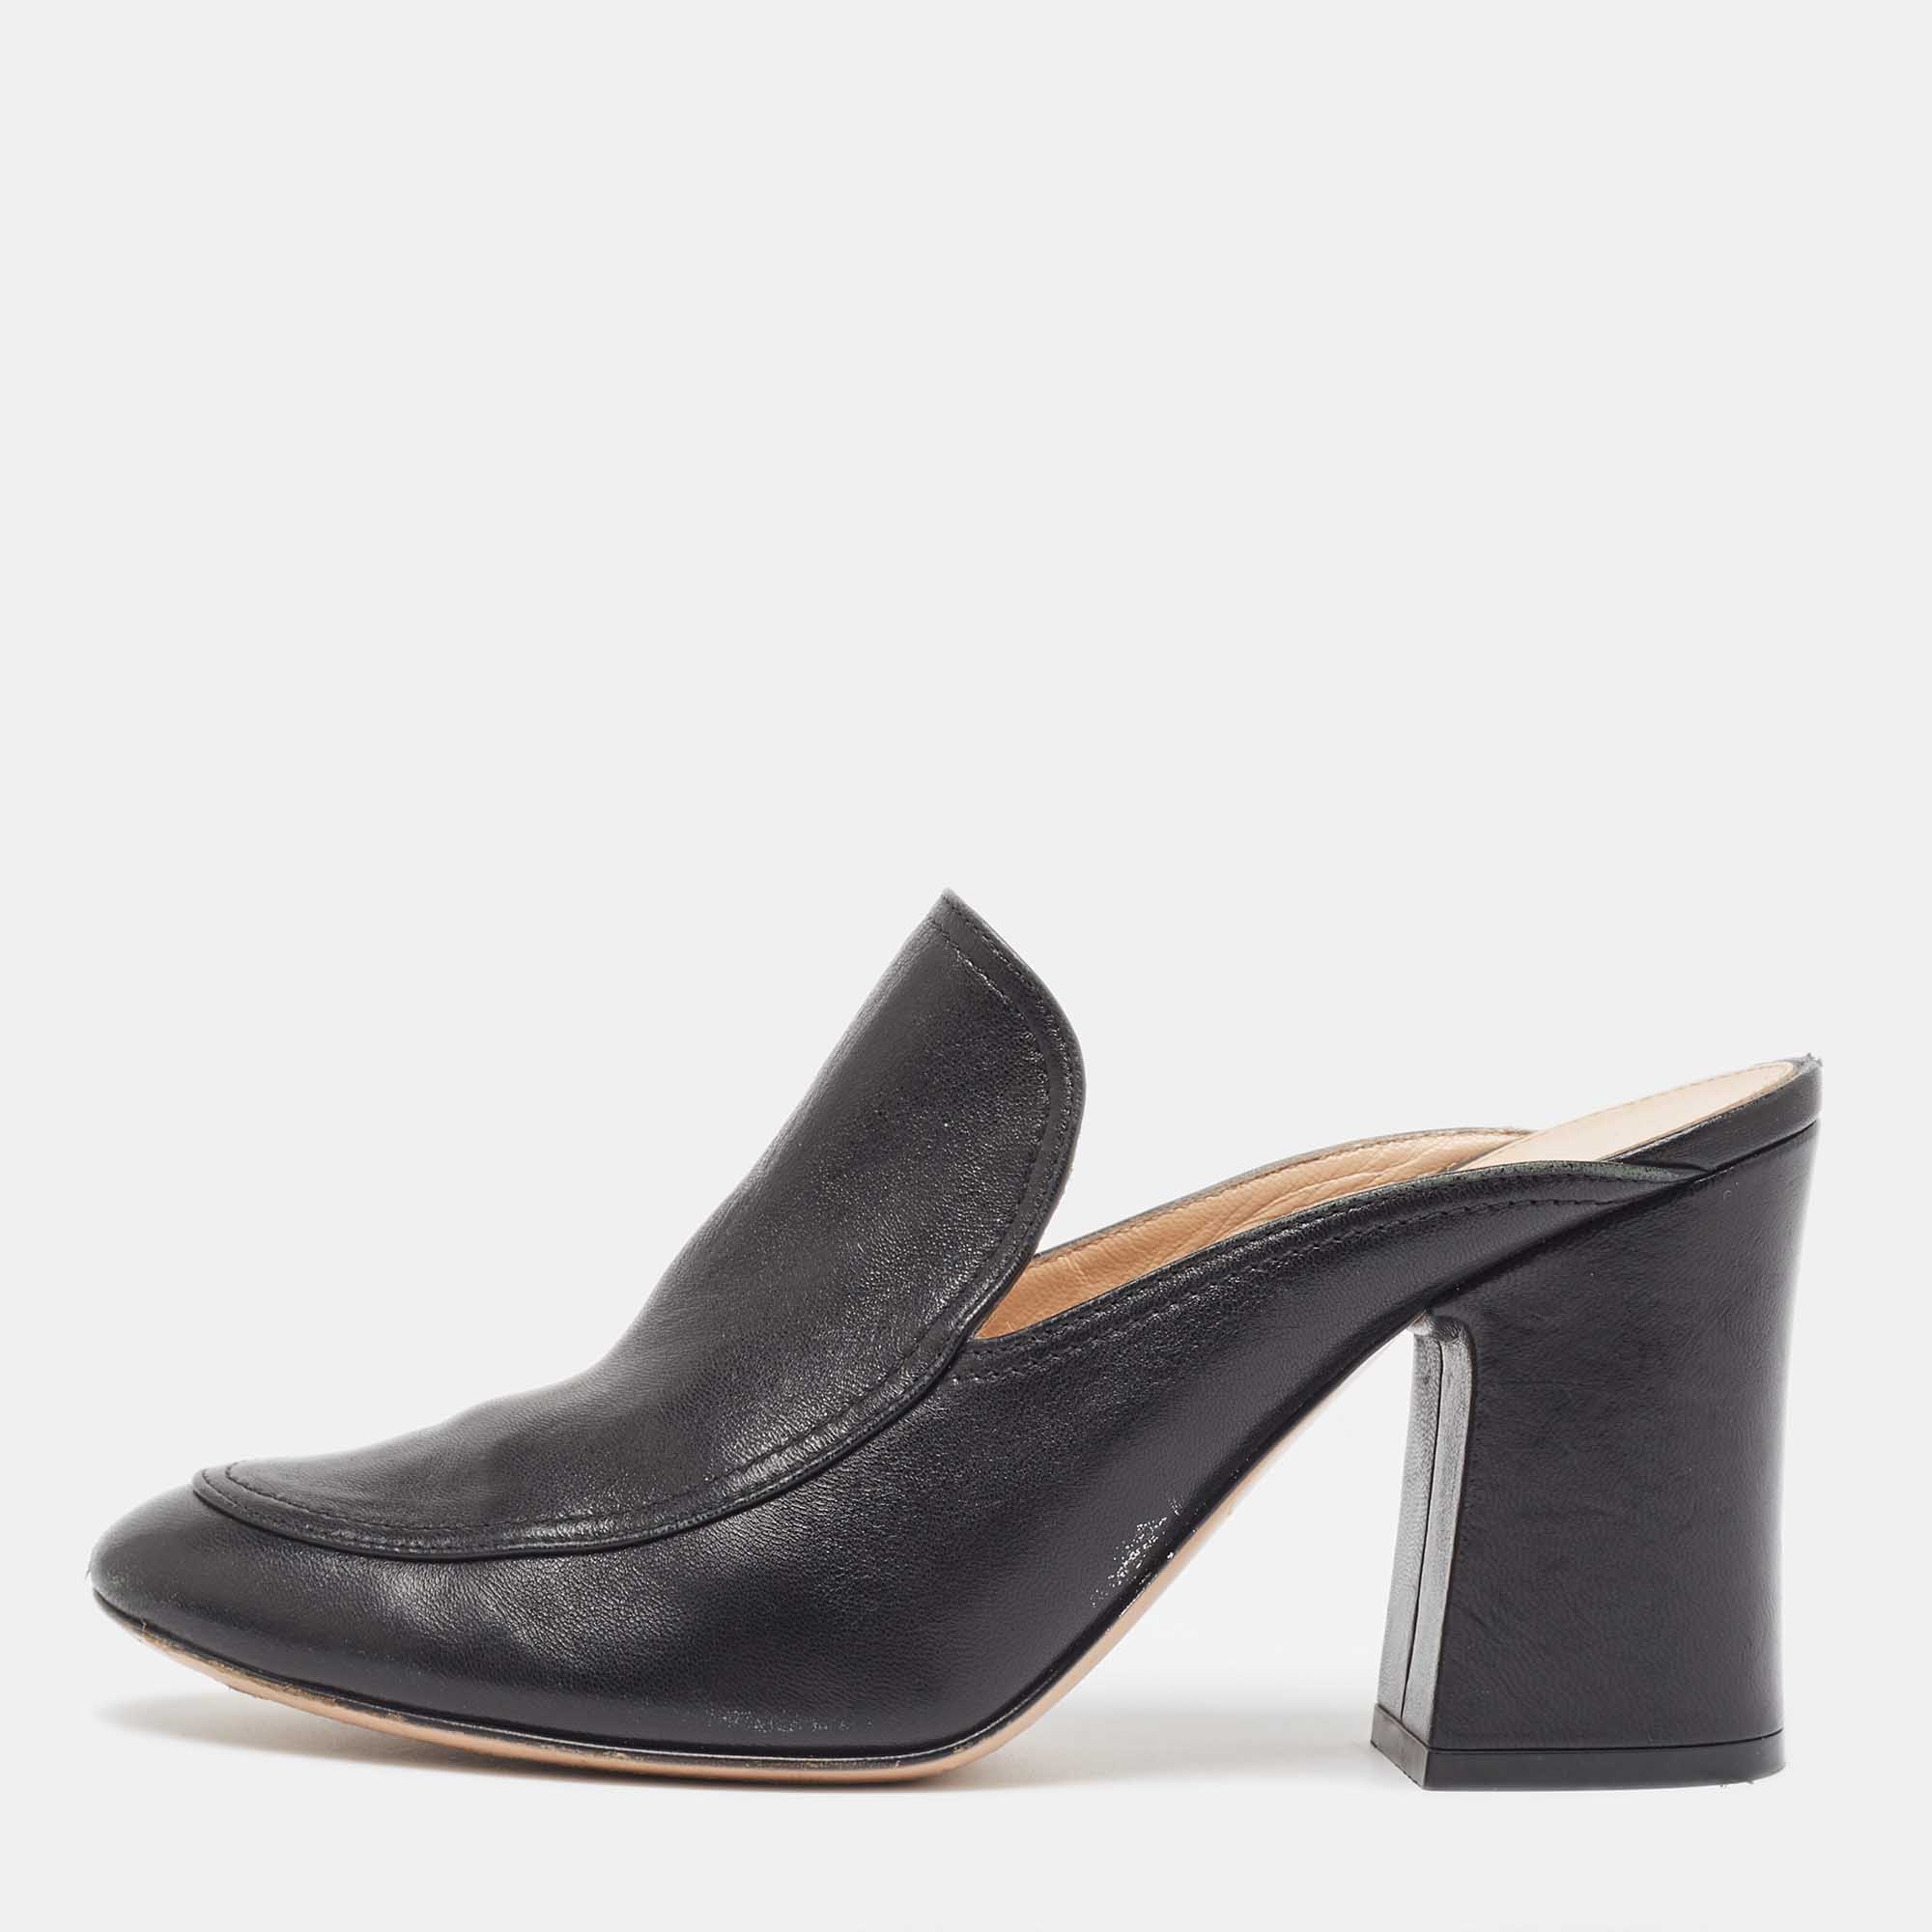 Gianvito rossi black leather slides sandals size 38